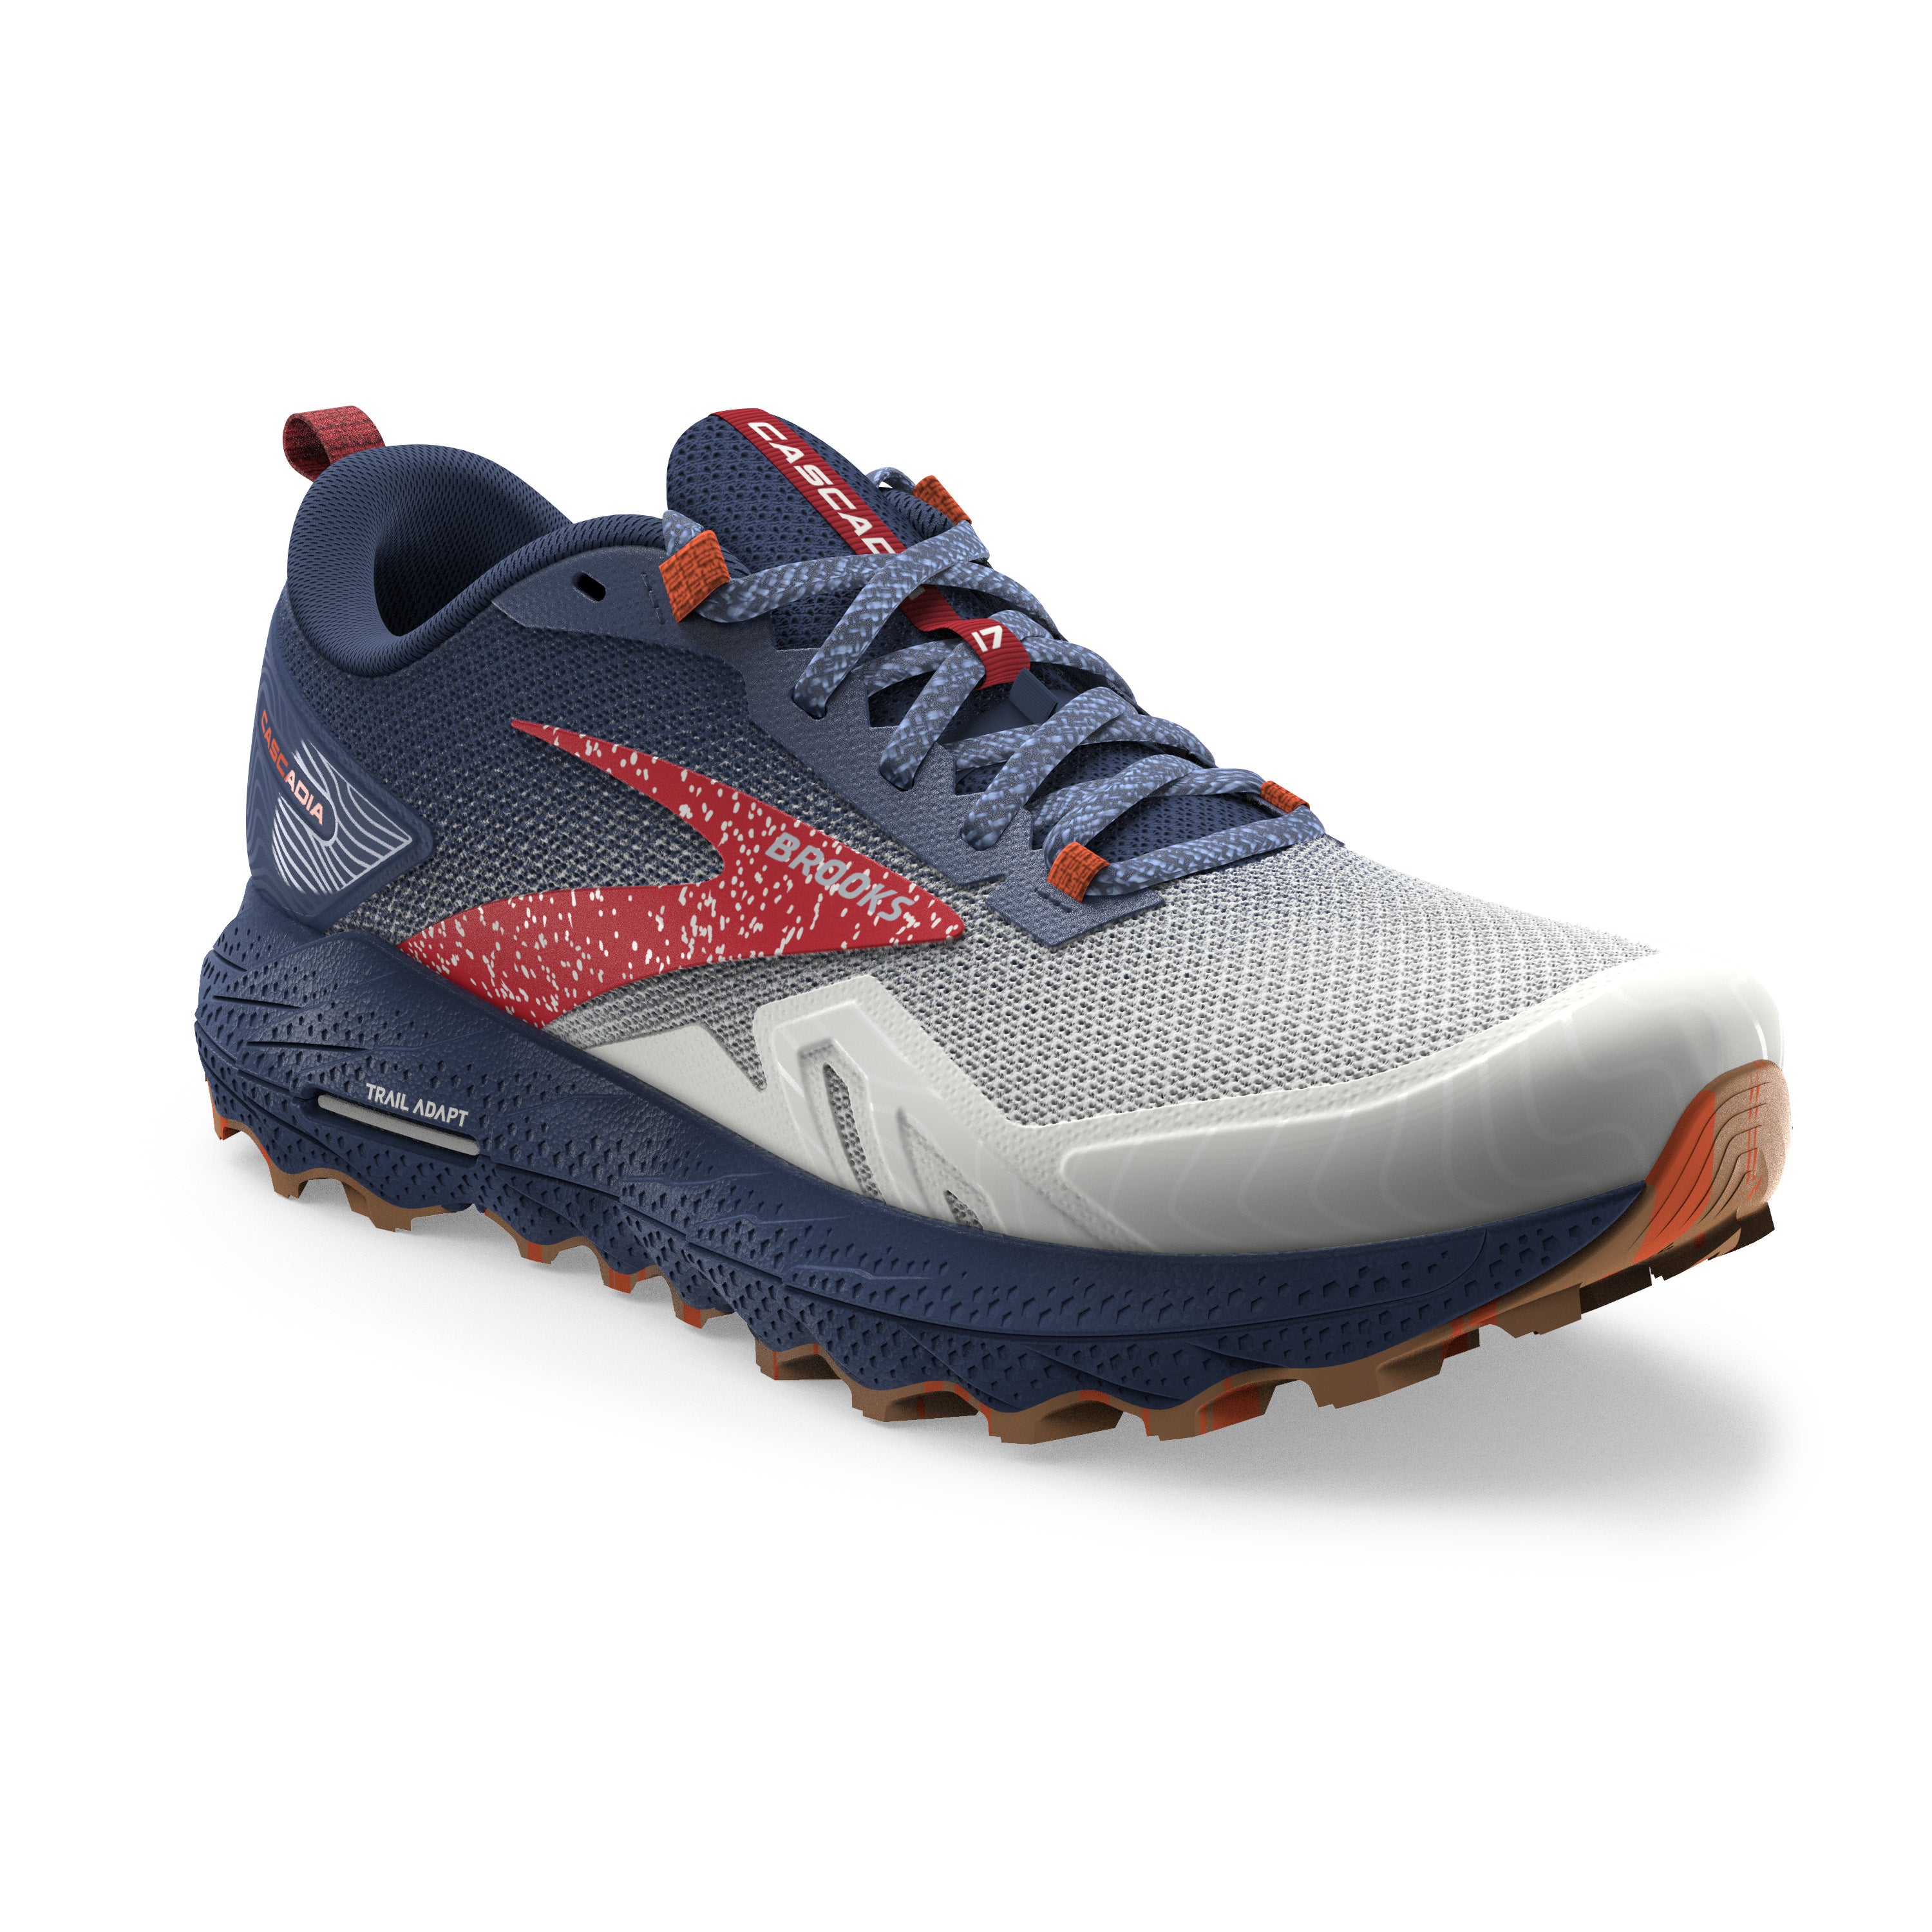 Cascadia 17 - Women's Trail Running Shoes